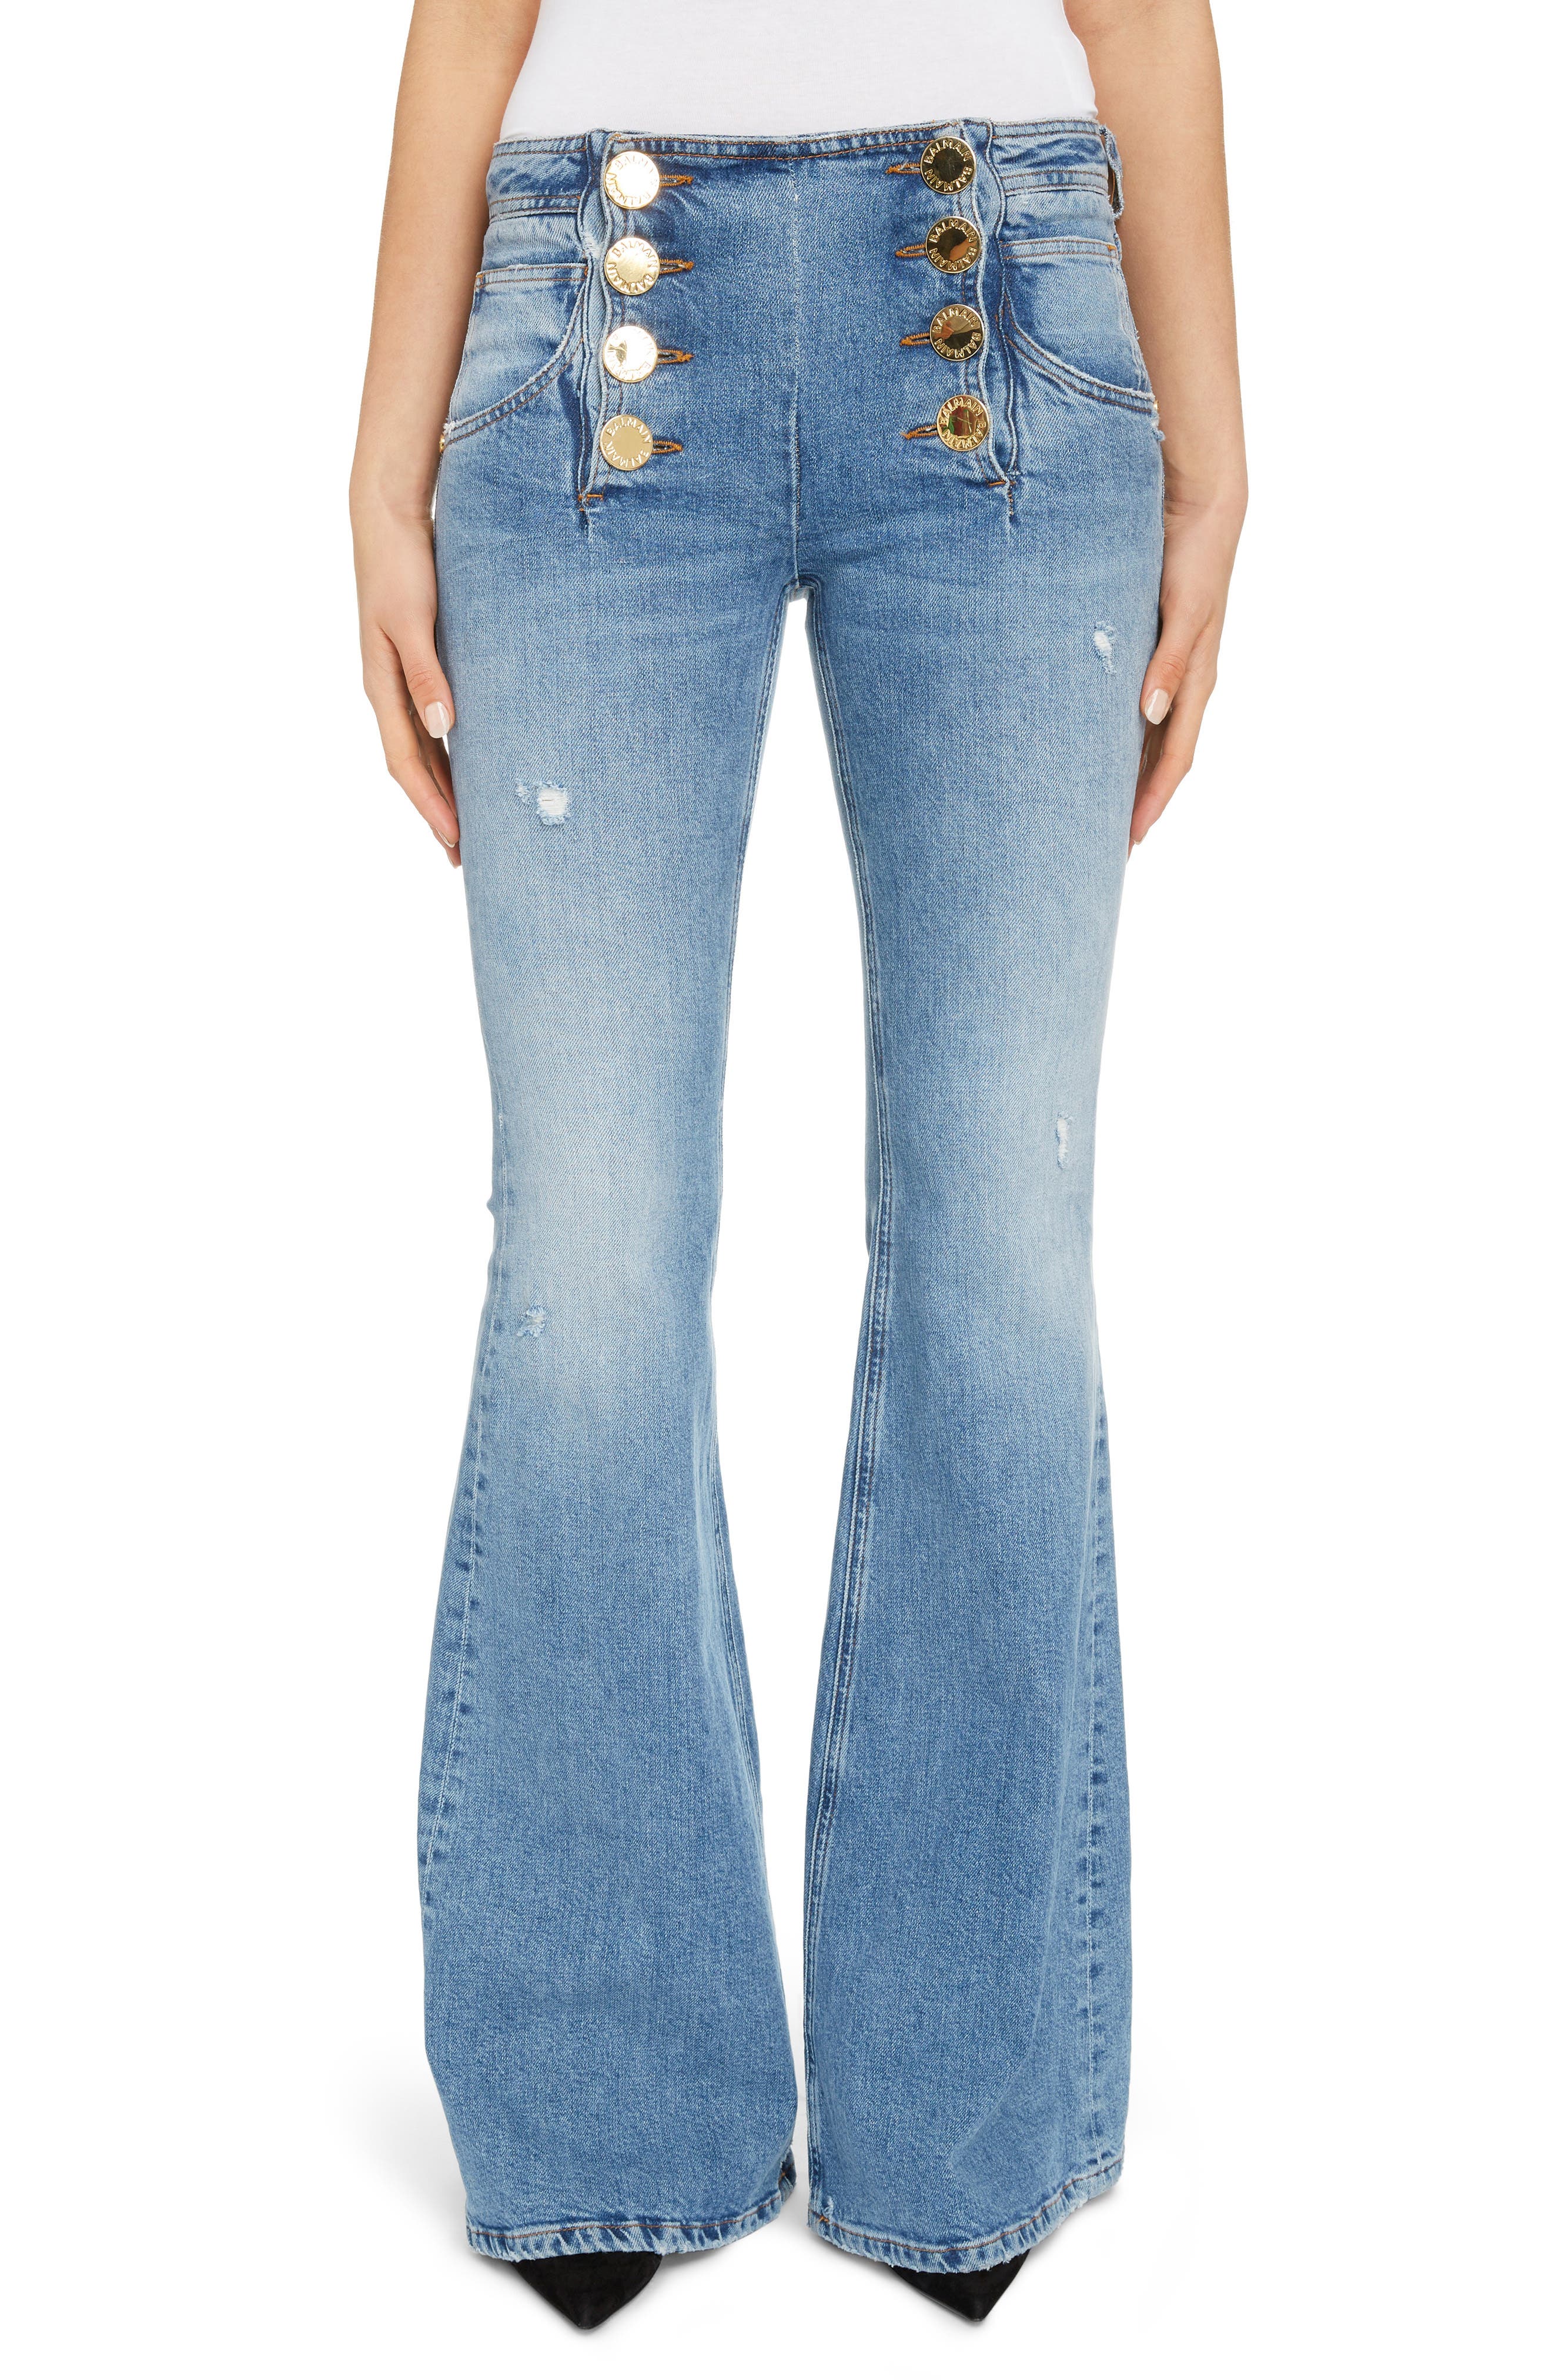 balmain jeans canada